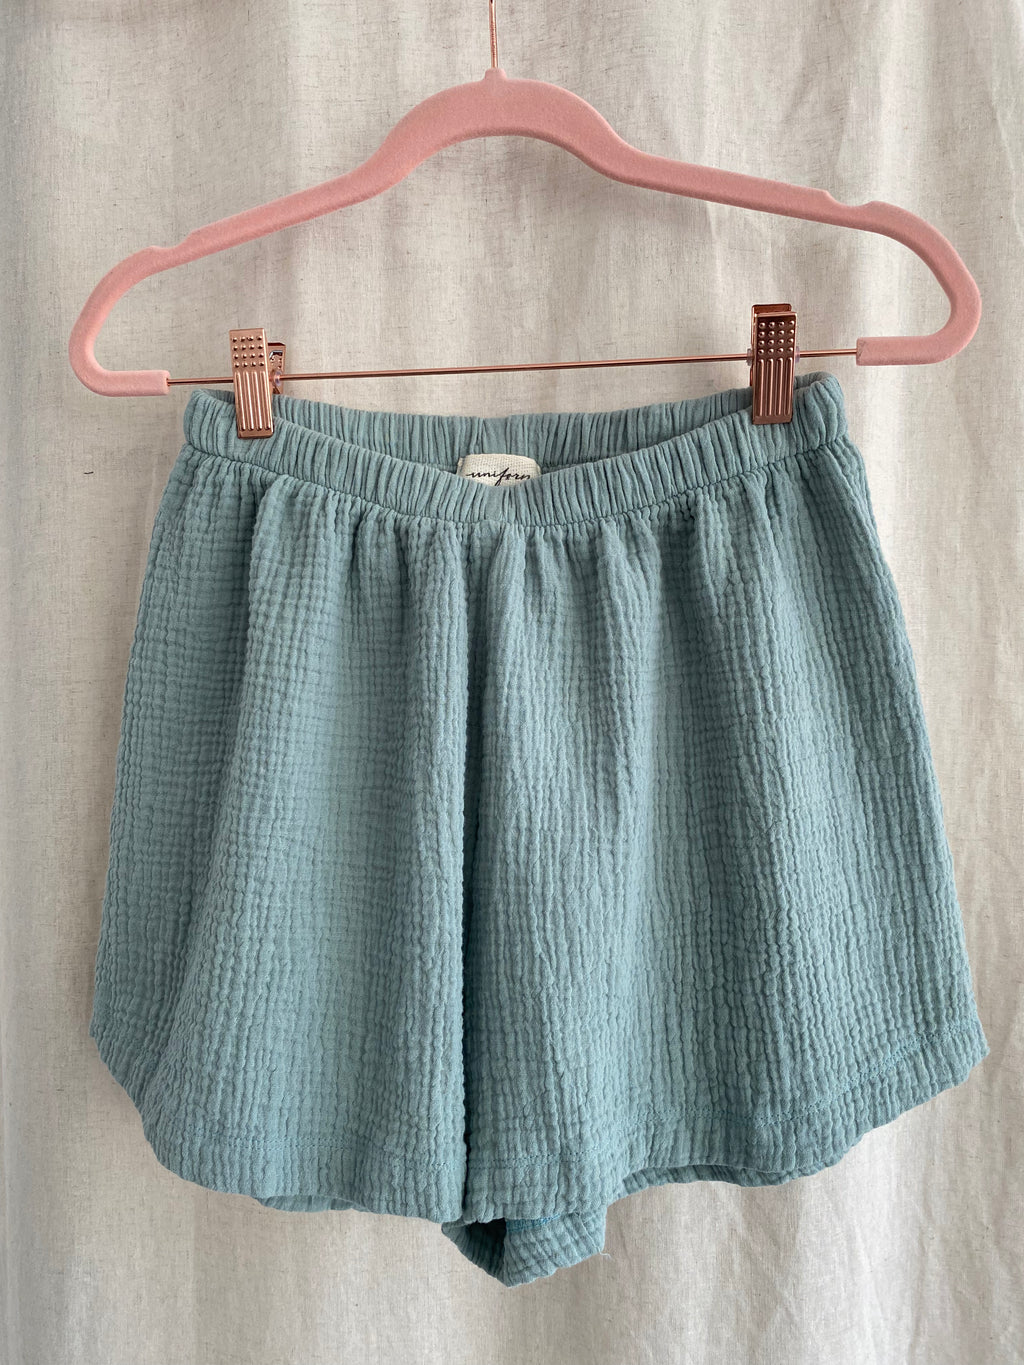 Marketplace - Small - Gauze Shorts - Mint